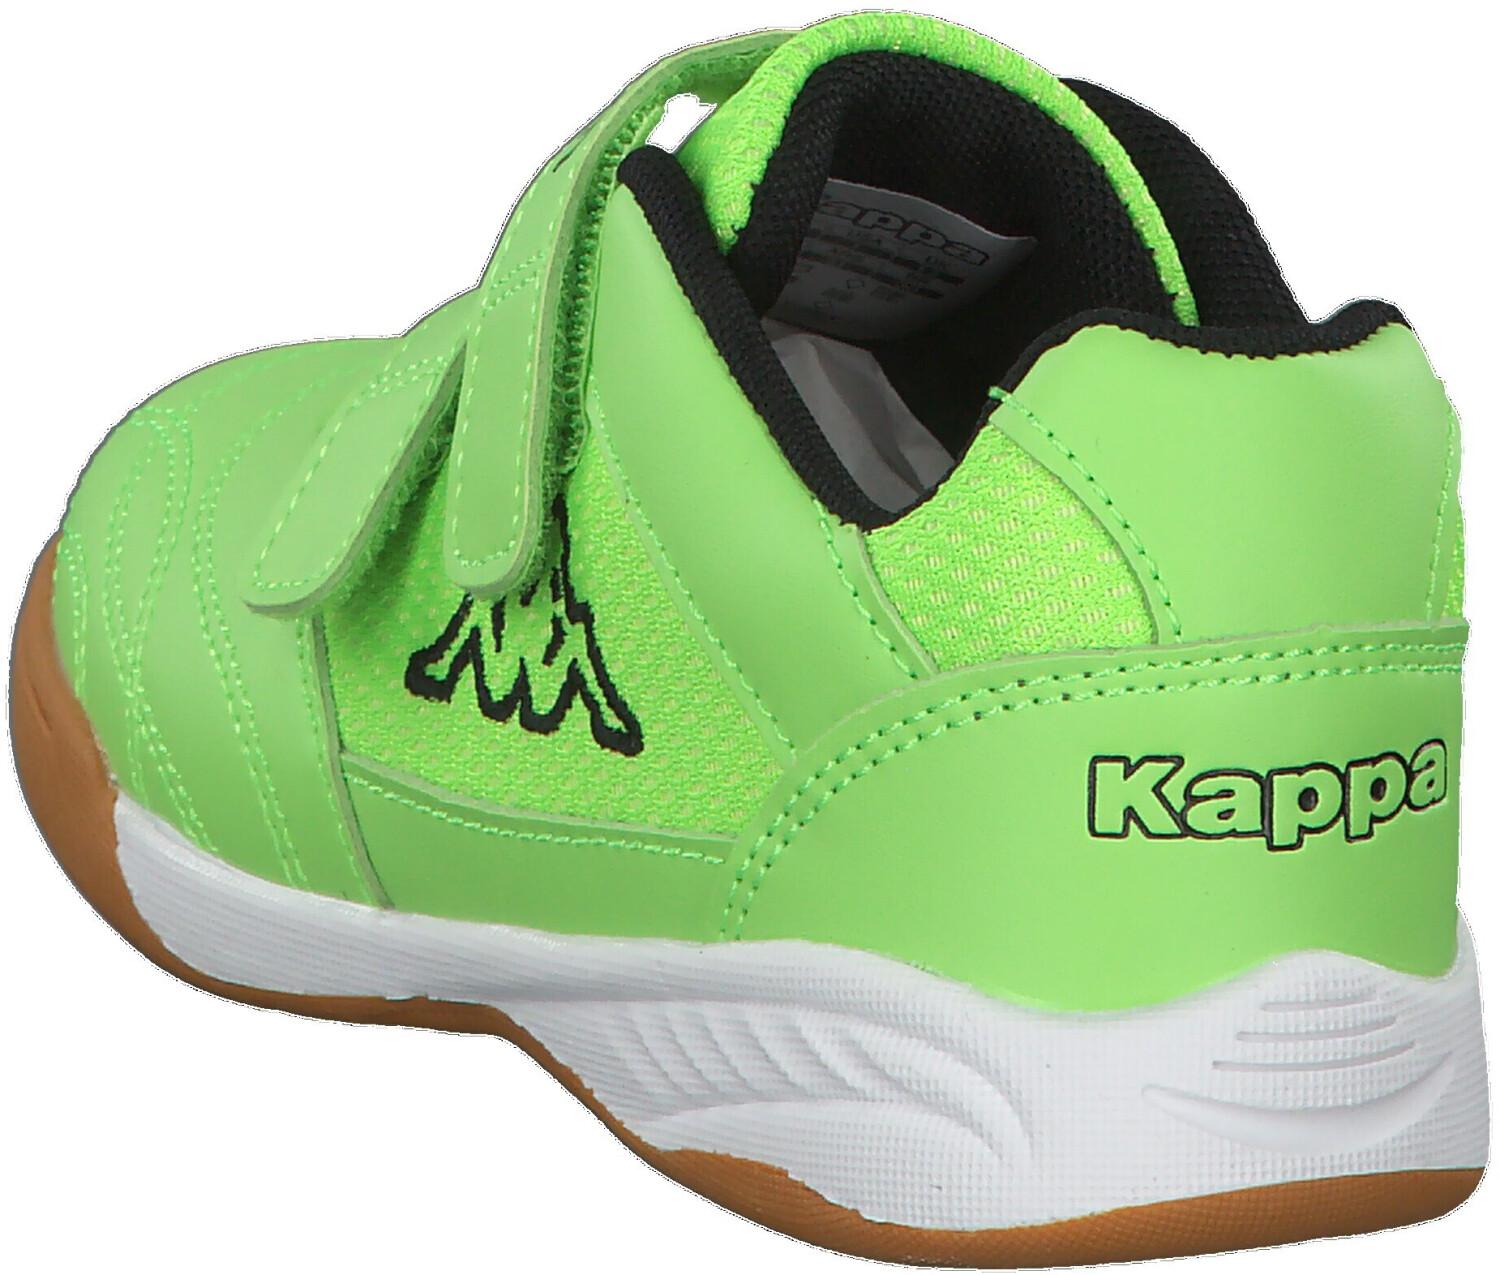 Kappa 260509K Green/Black ab 19,00 bei € Preisvergleich 